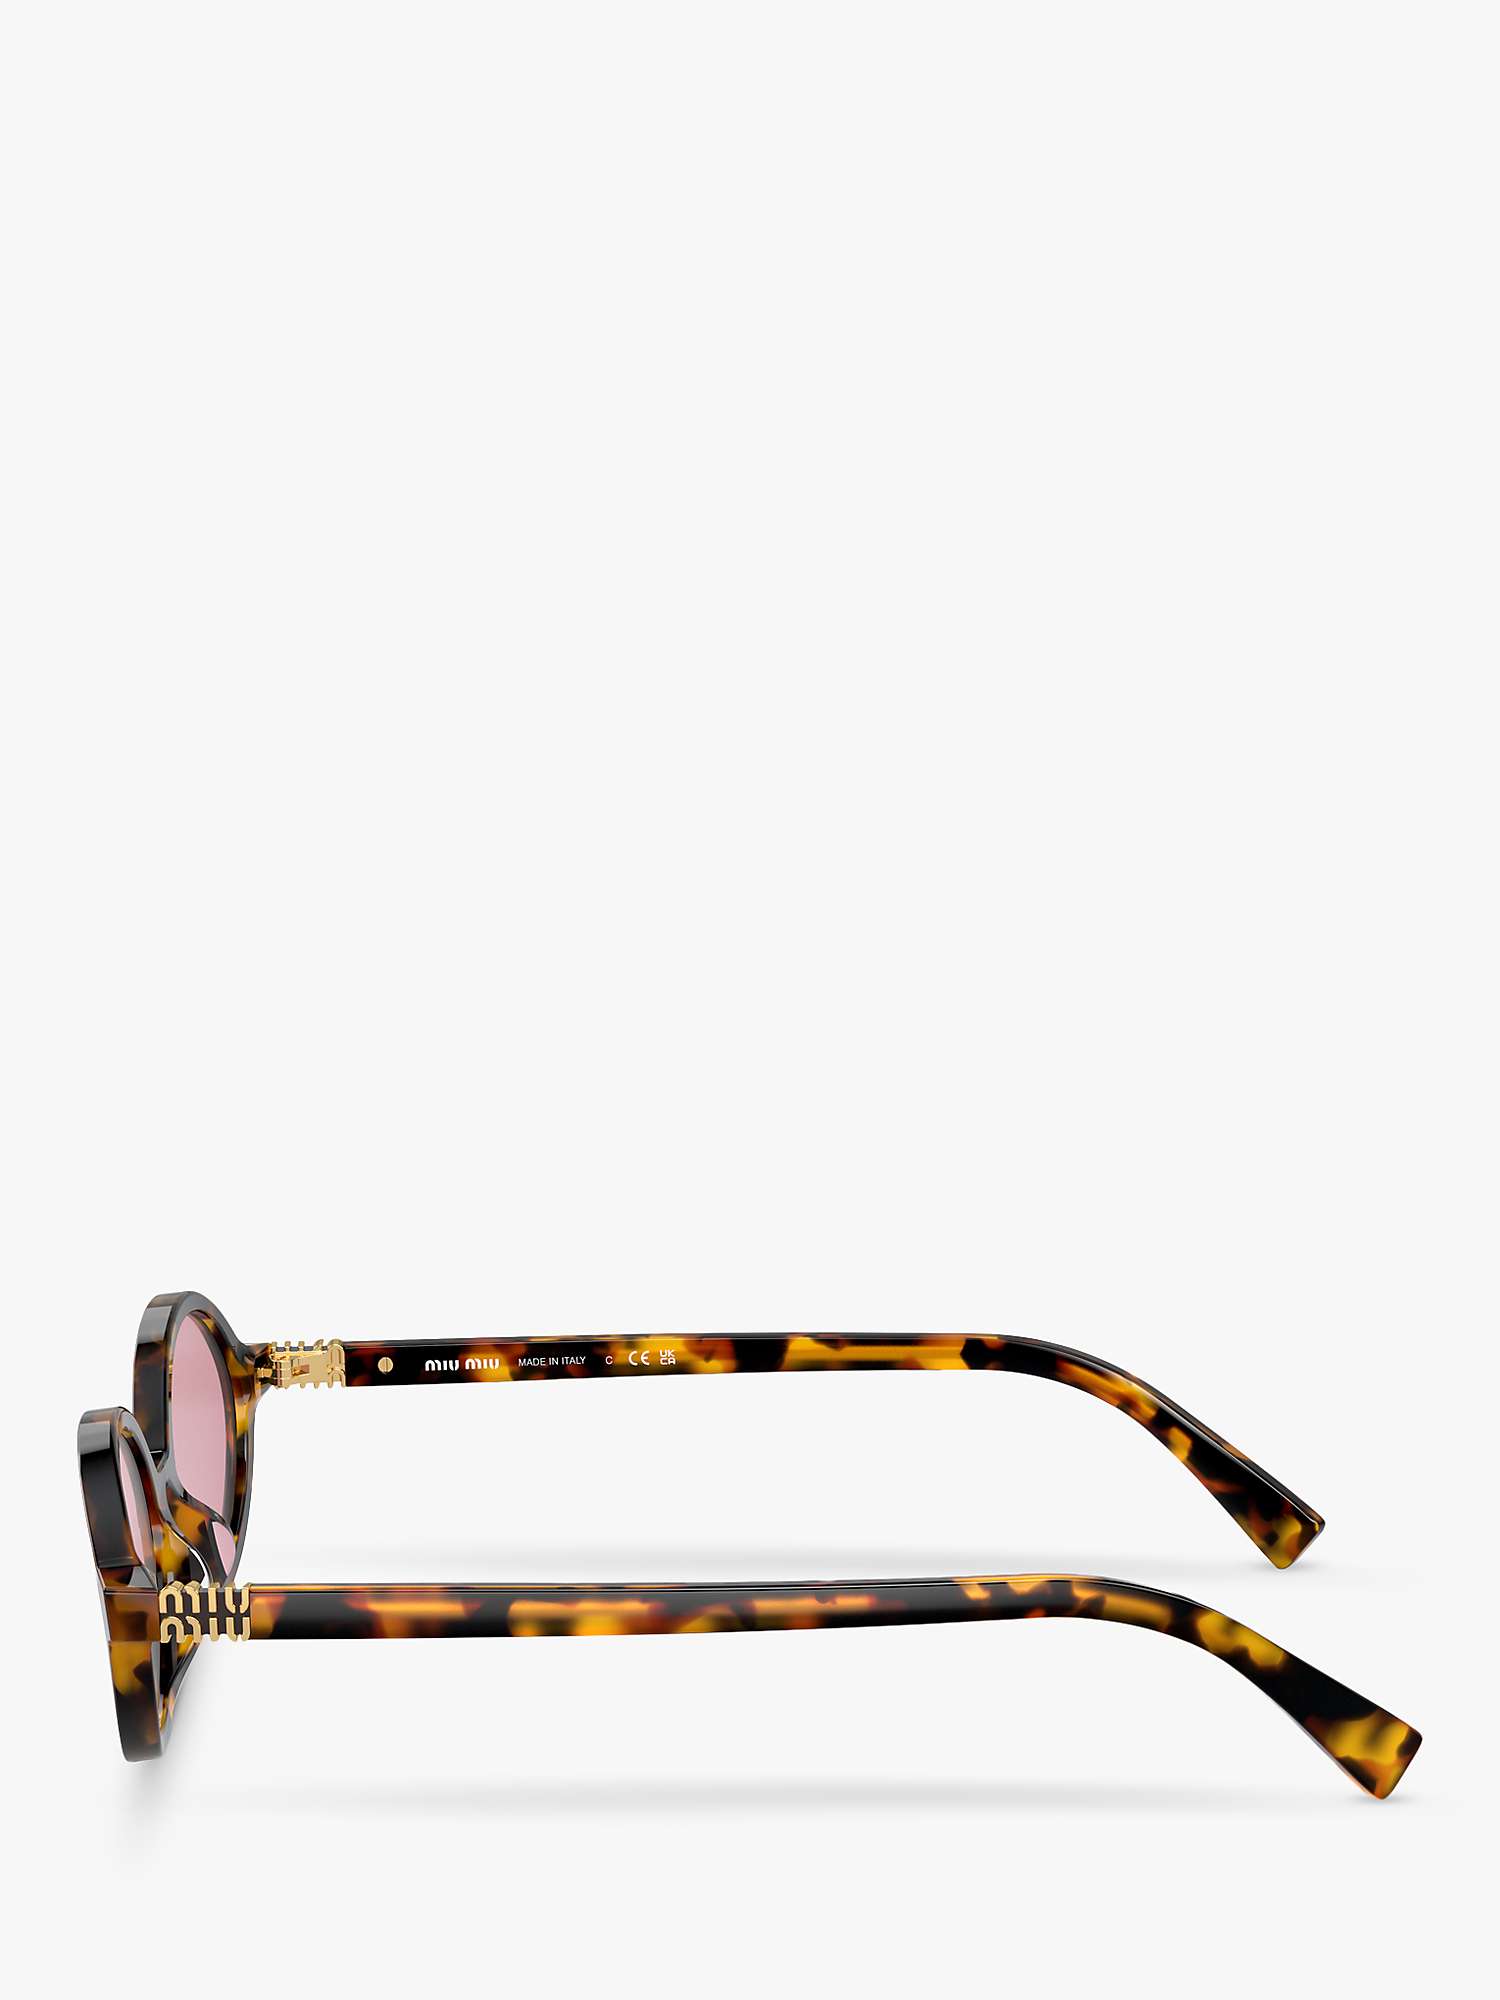 Buy Miu Miu MU 04ZS Women's Oval Sunglasses, Honey Havana/Pink Online at johnlewis.com